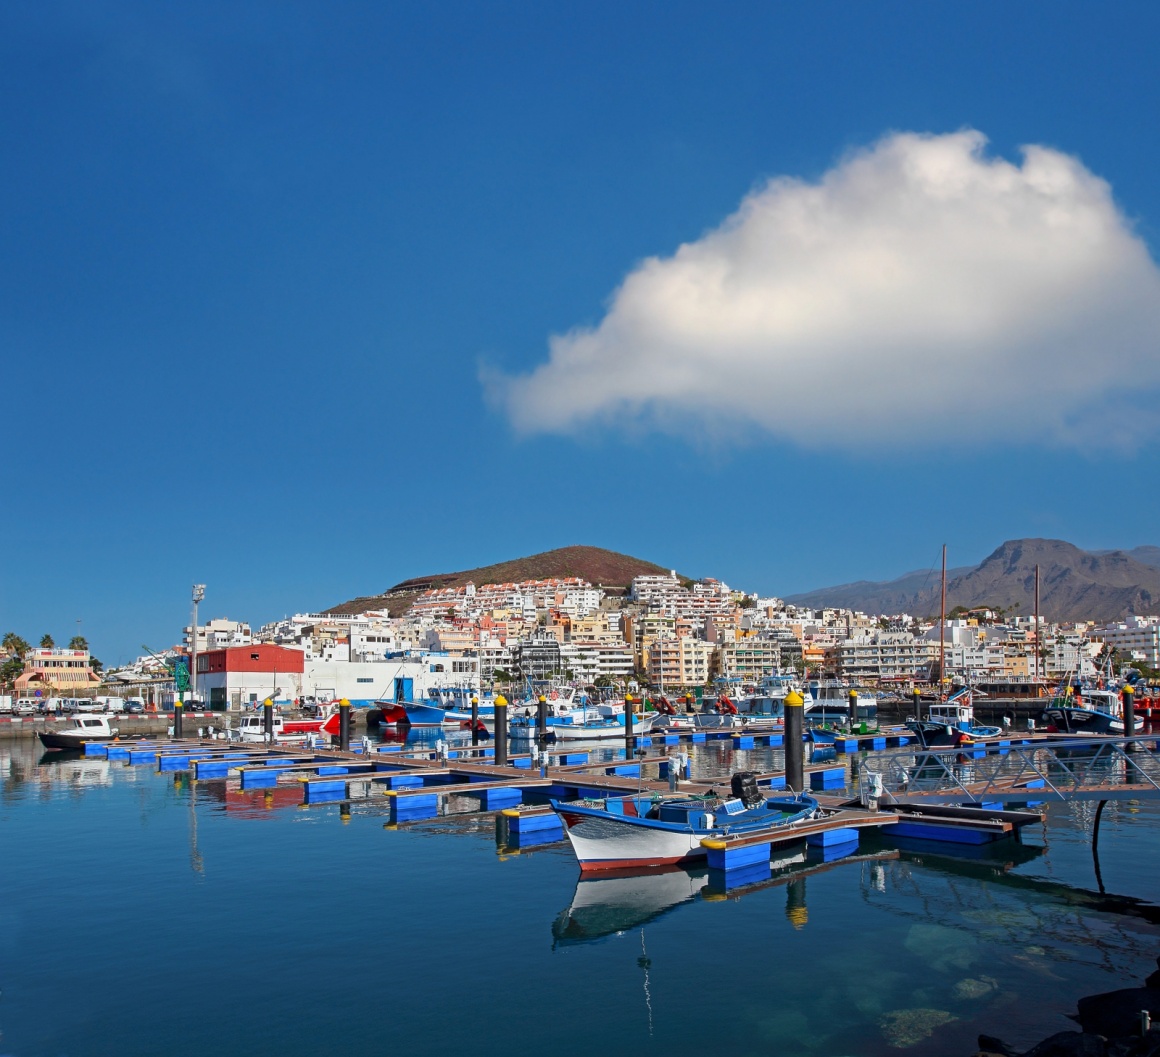 'Harbor in Los Cristianos resort town in Tenerife, Canary Islands, Spain' - Tenerife